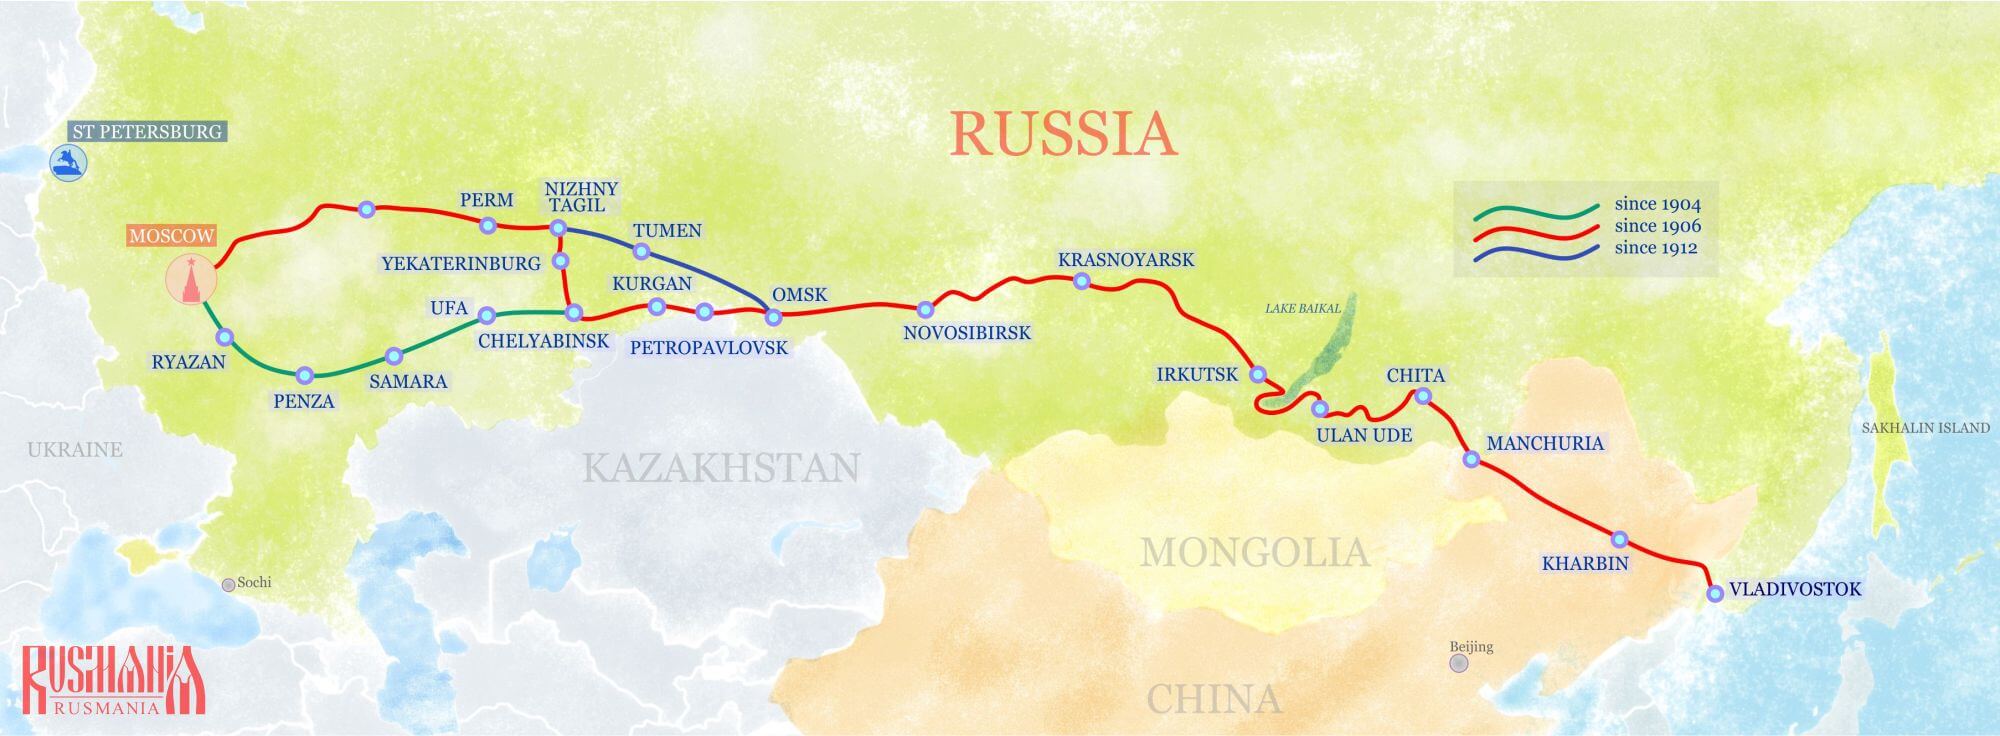 Russian Rail To Develop Trans-Siberian Rail Capacity East, Before